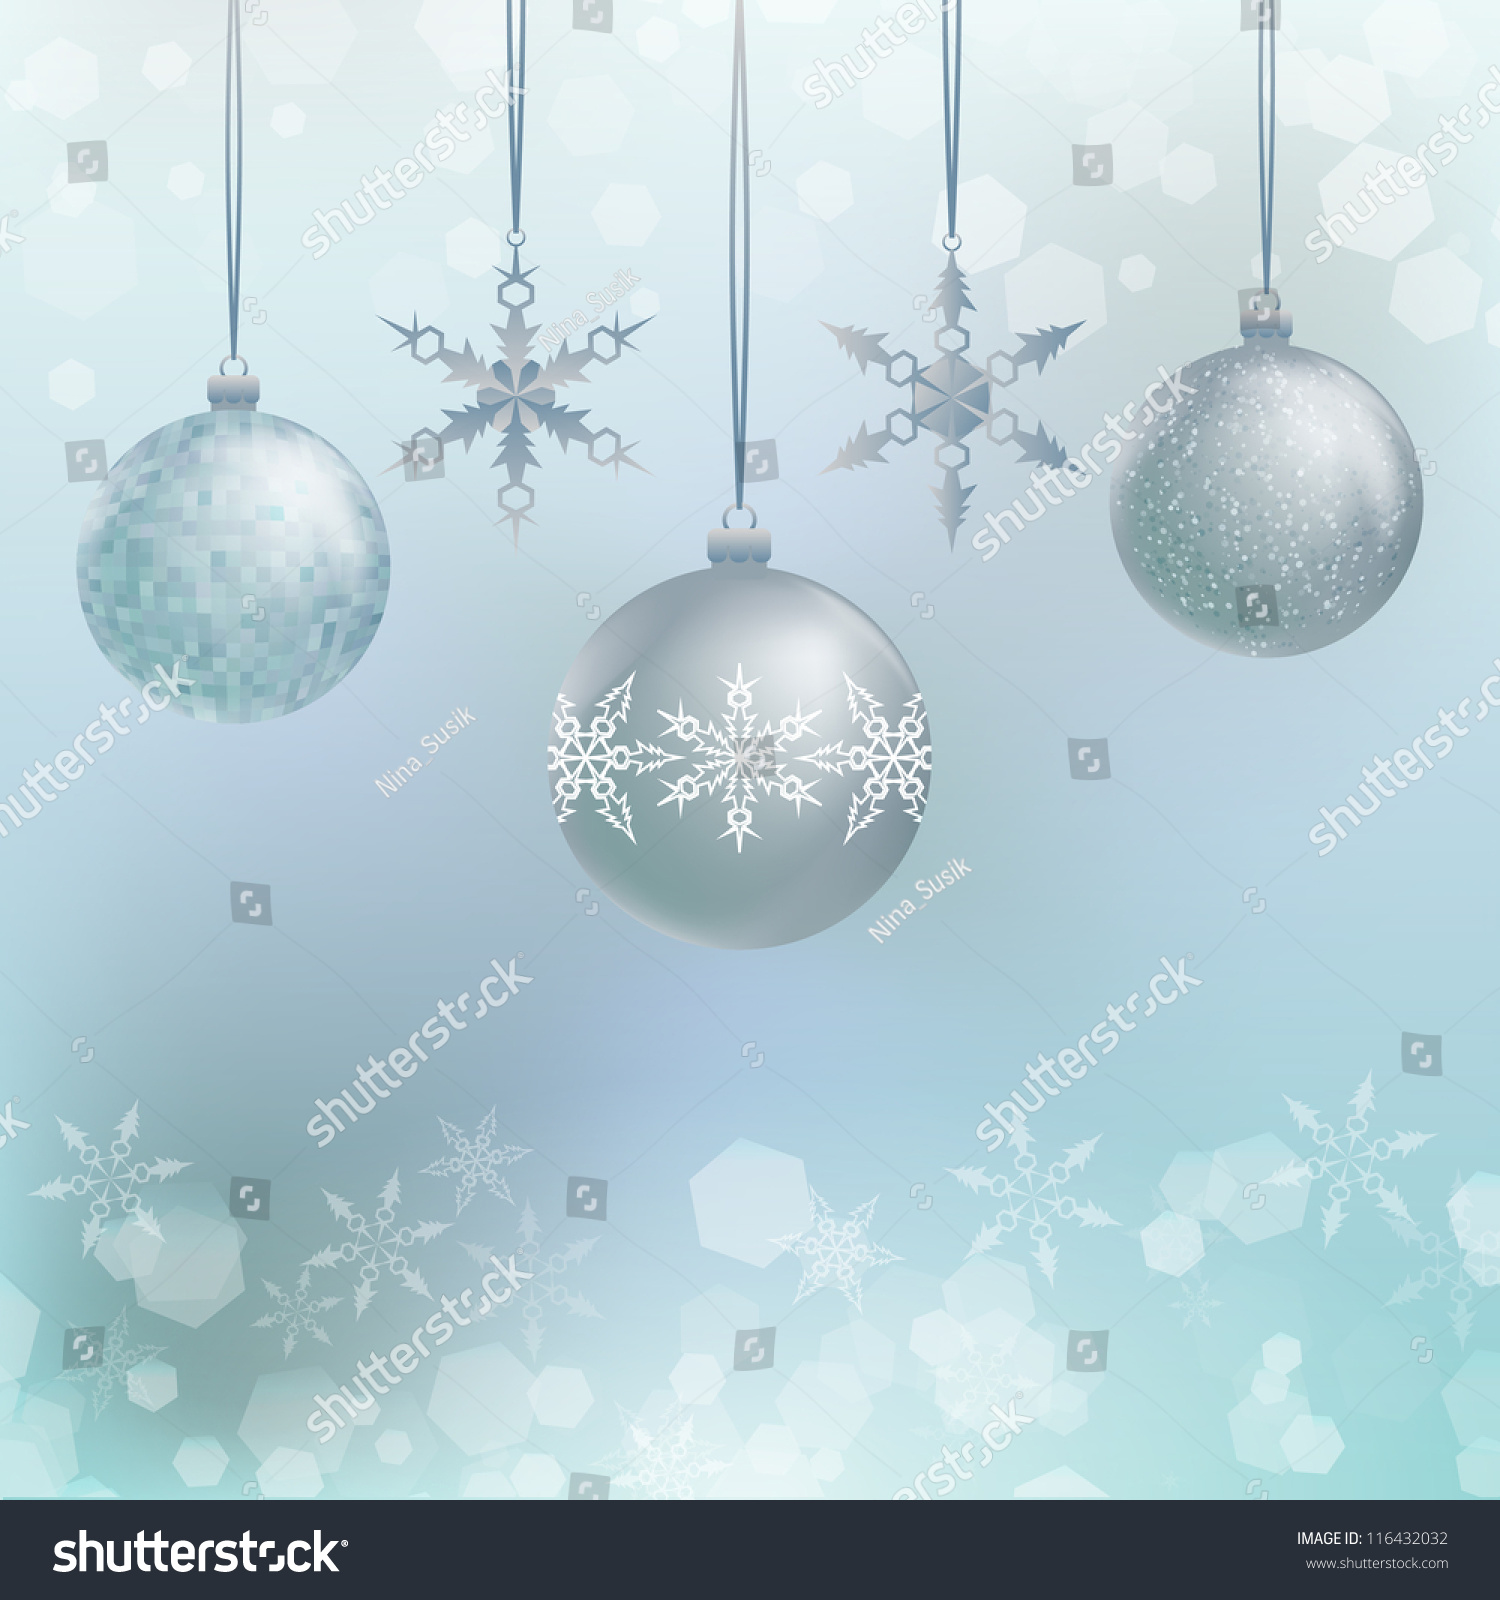 Illustration Of Three Christmas Decoration Balls With Snowflakes, Blur ...